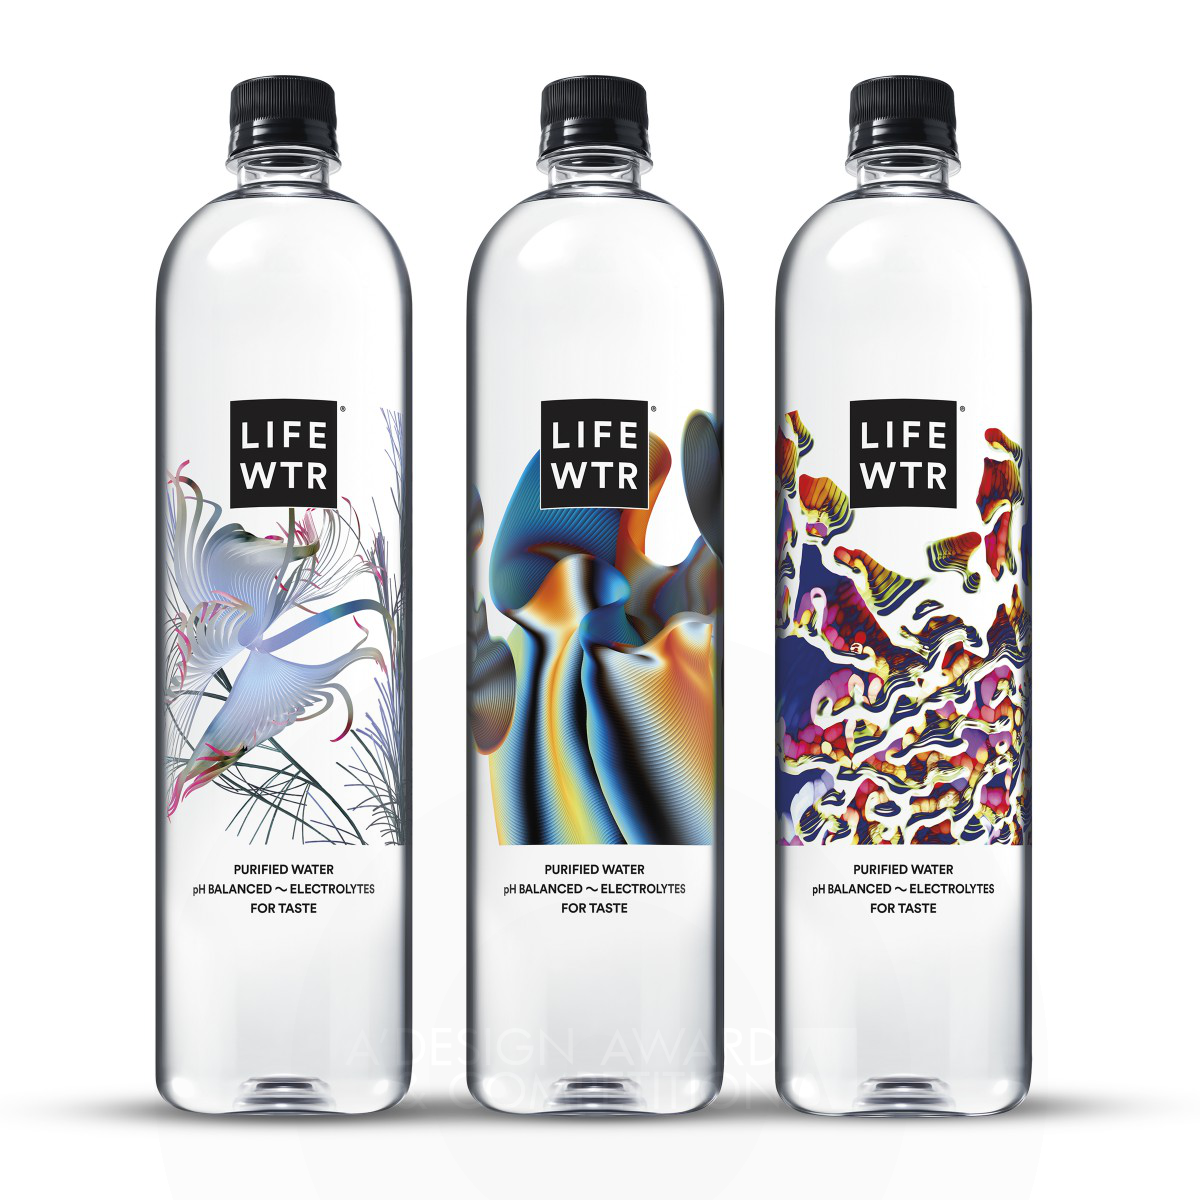 Lifewtr Series 7: Art through Technology Packaging by PepsiCo Design & Innovation